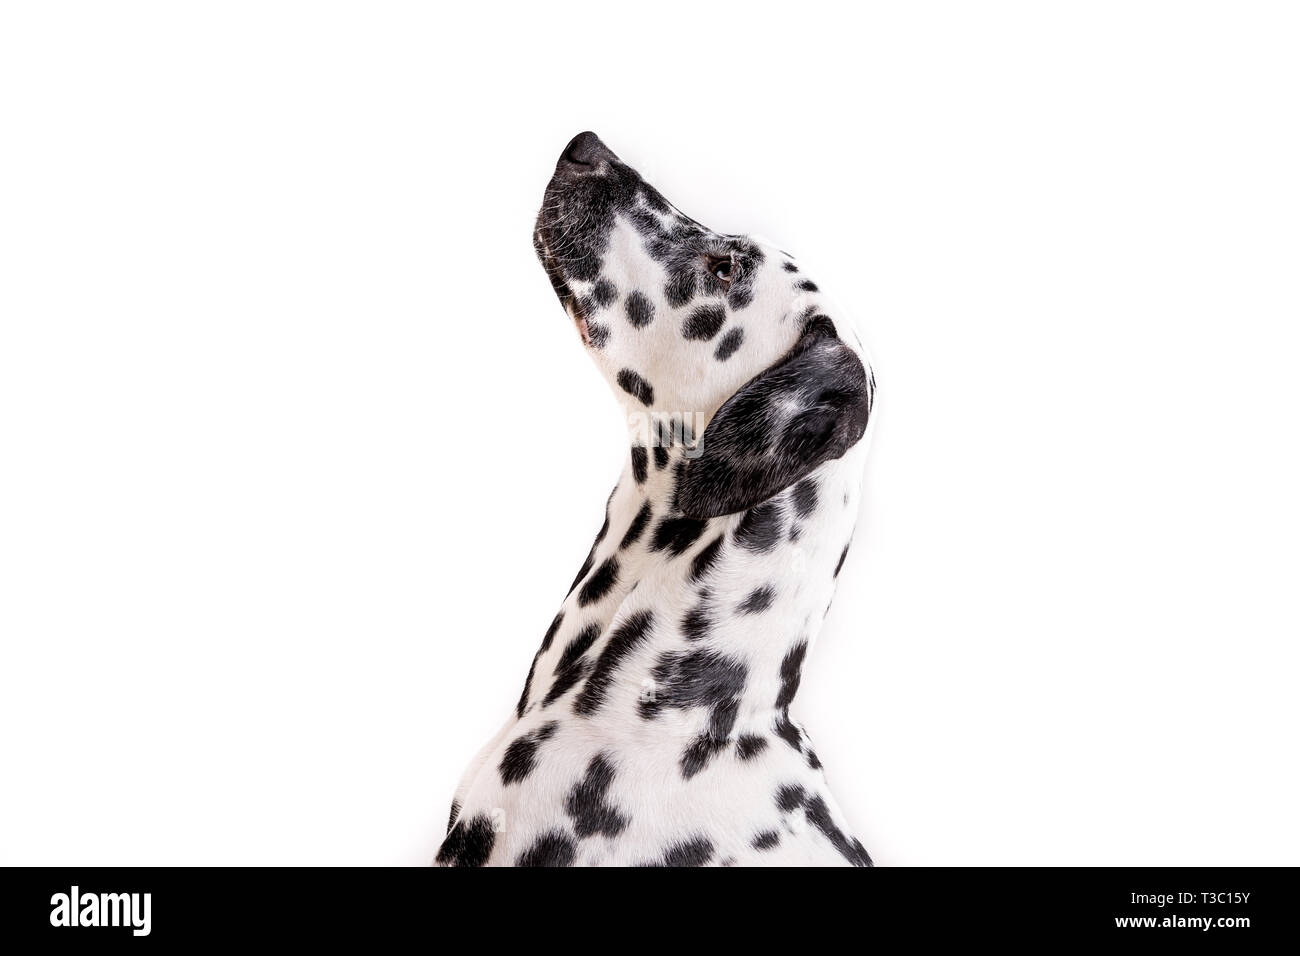 Headshot of a young Dalmatian dog isolated on white background Stock Photo